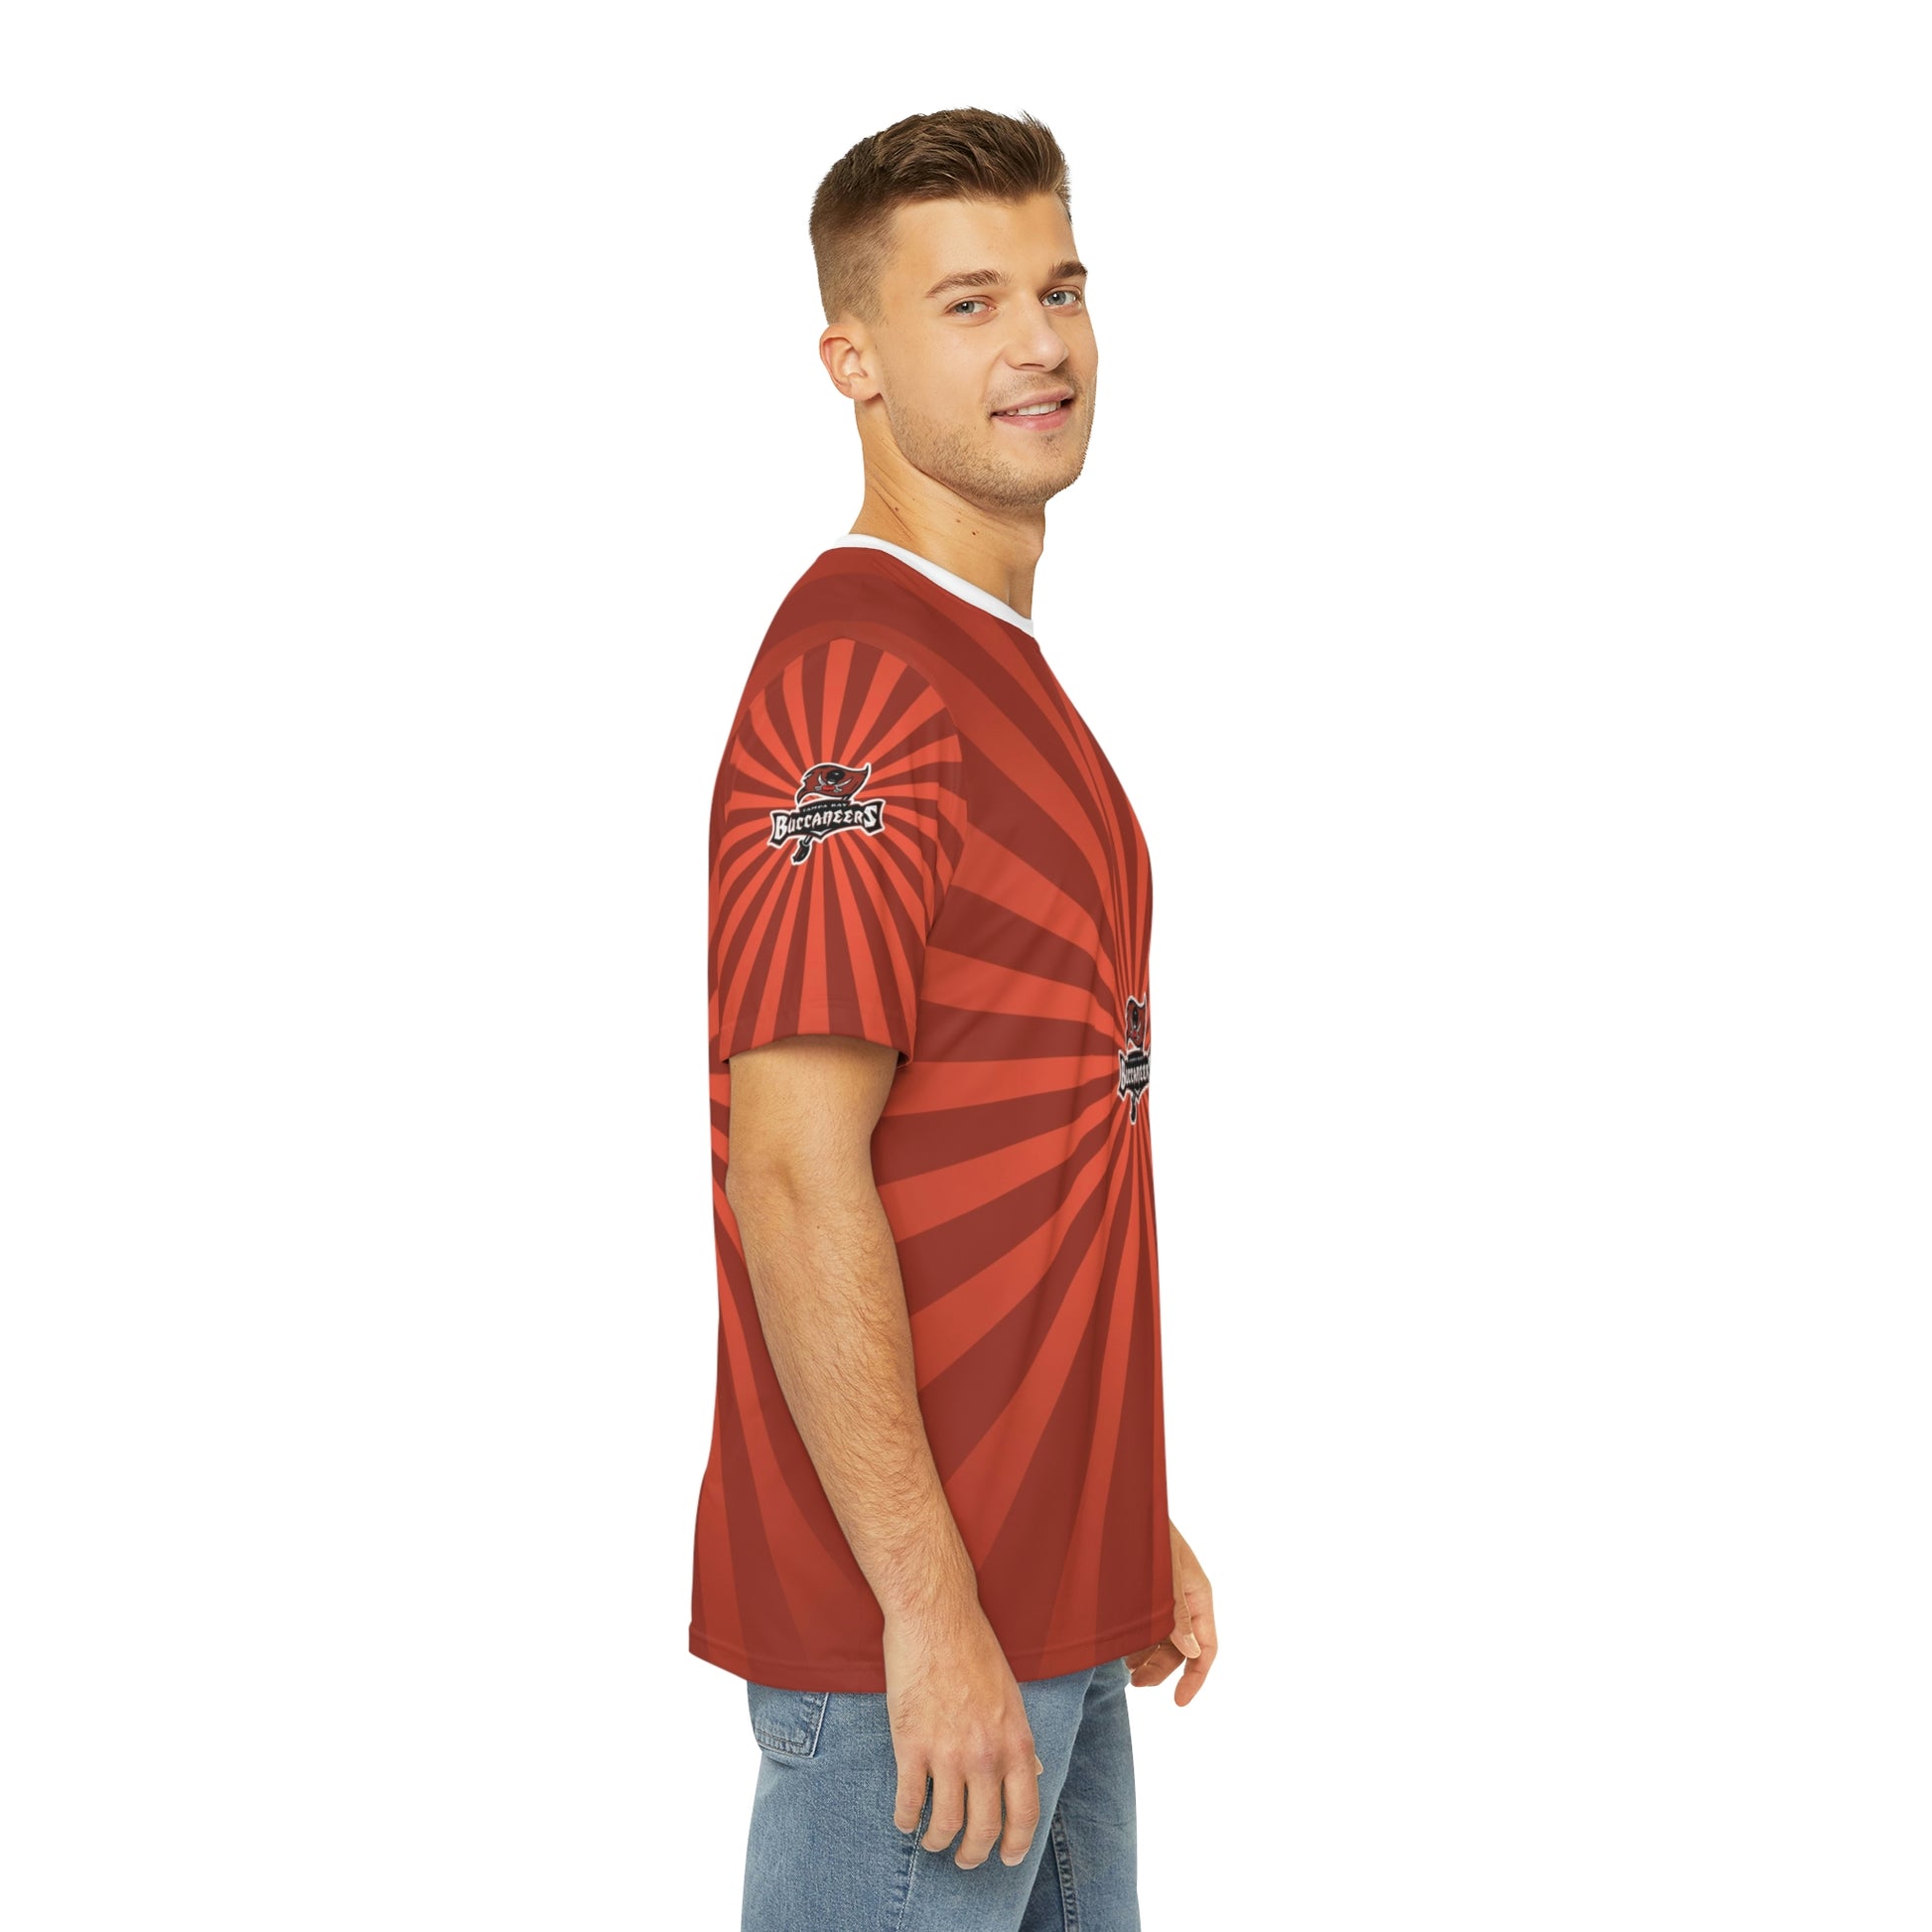 Geotrott NFL NO NAME1 Men's Polyester All Over Print Tee T-Shirt-All Over Prints-Geotrott